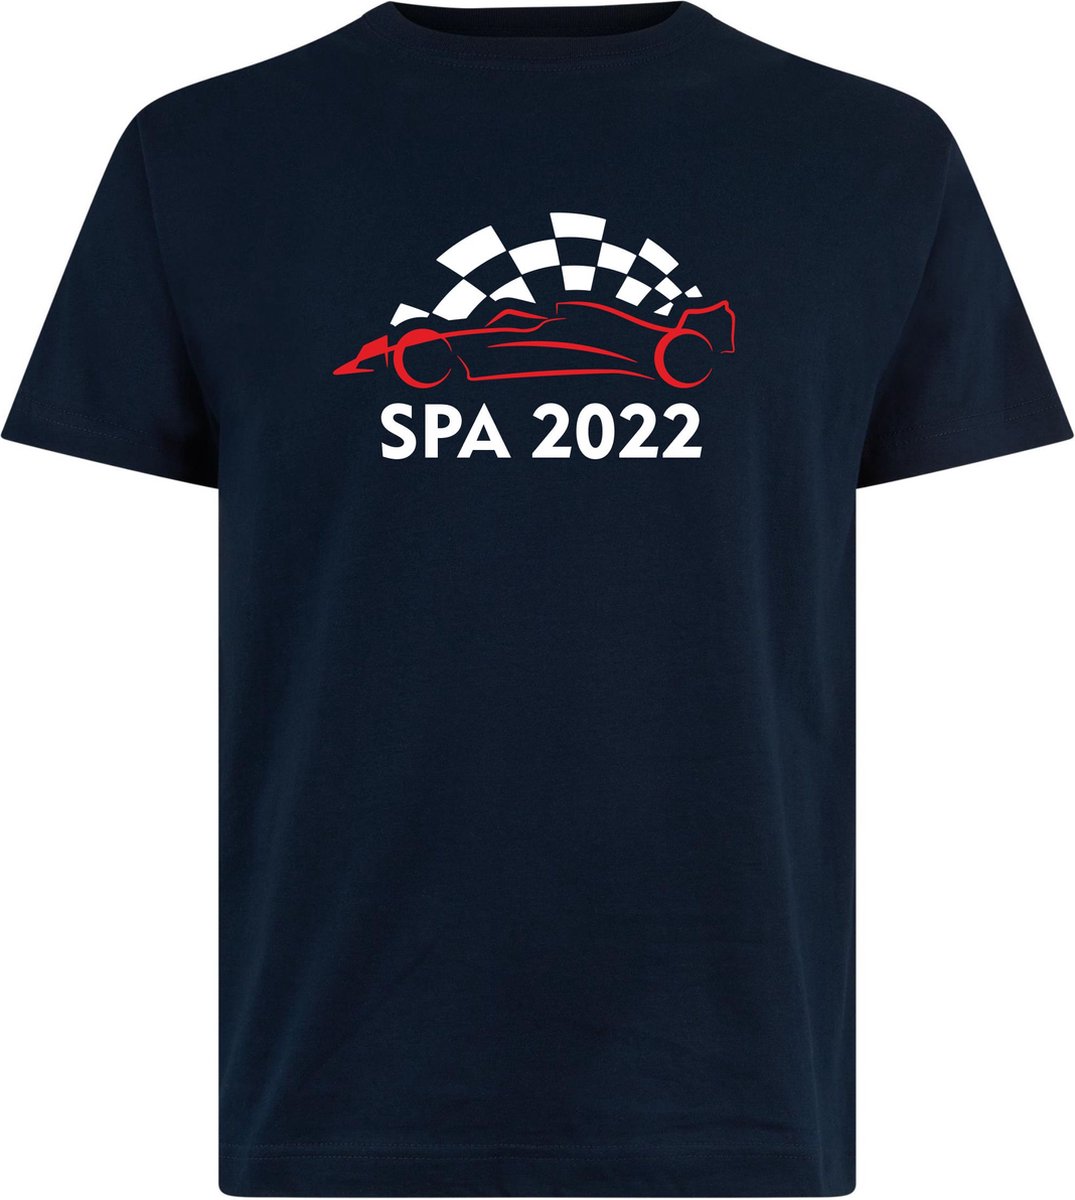 T-shirt kinderen Spa 2022 met raceauto | Max Verstappen / Red Bull Racing / Formule 1 fan | Grand Prix Circuit Spa-Francorchamps | kleding shirt | Navy | maat 152